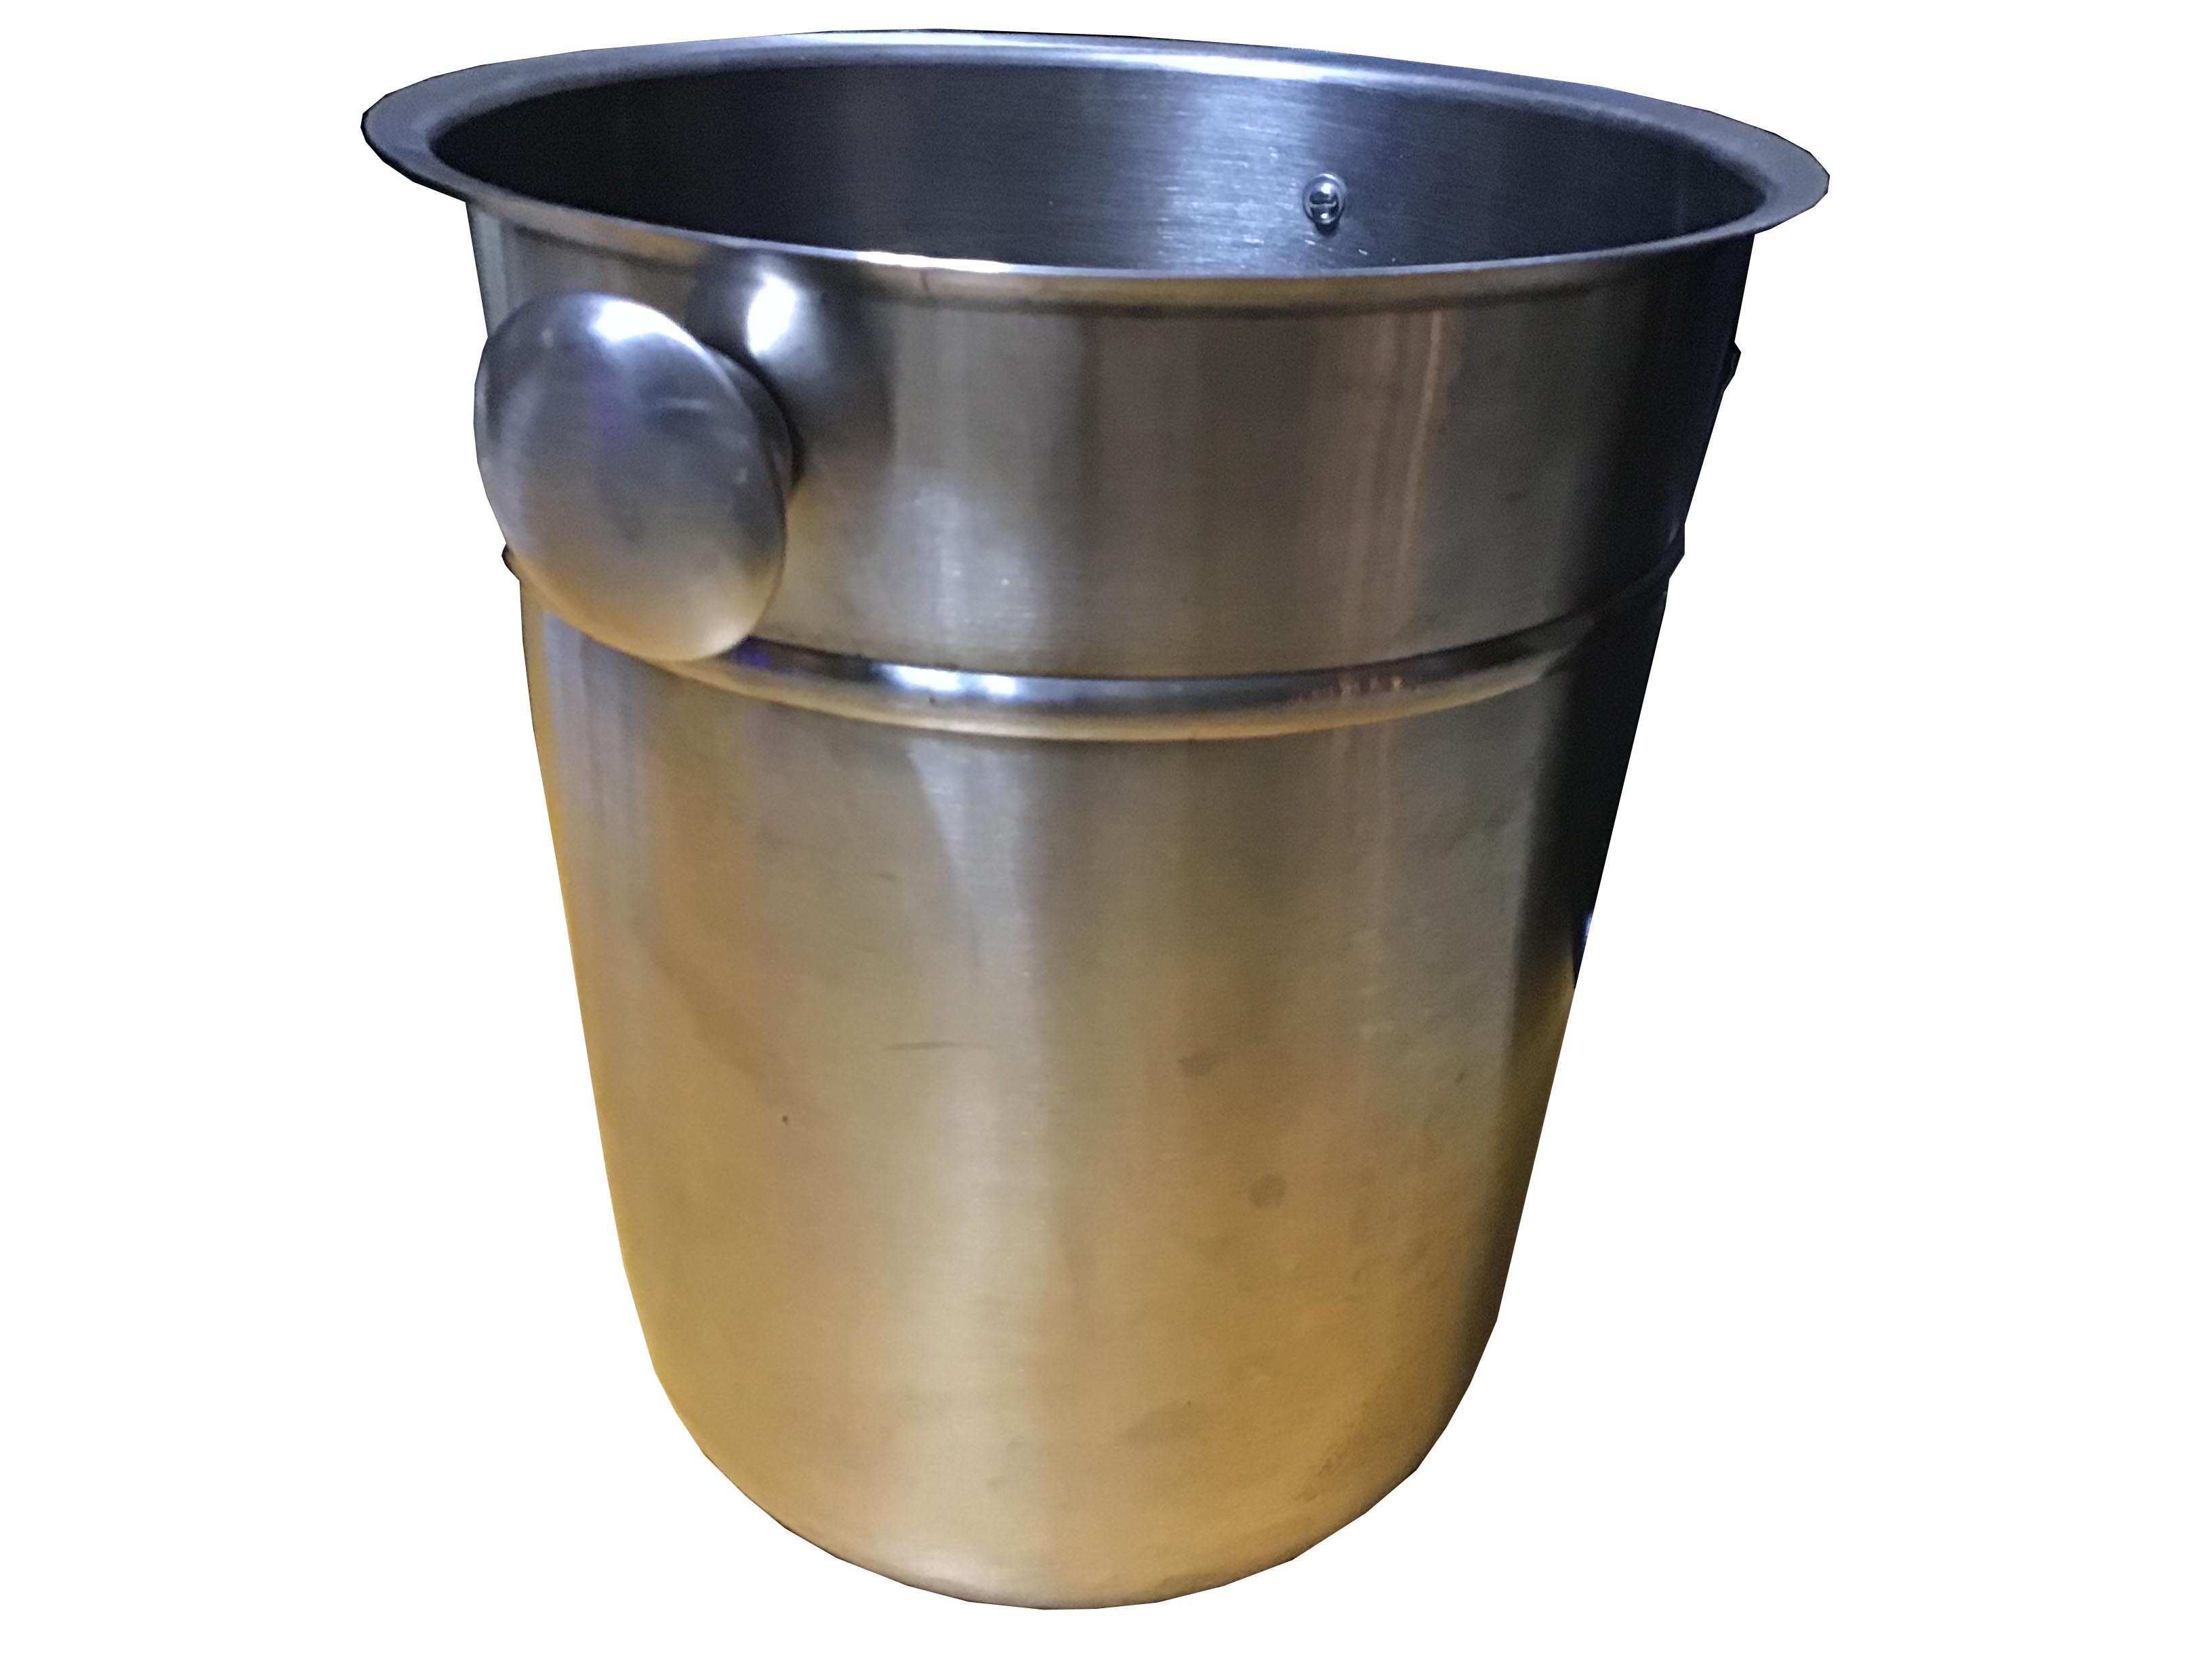 wine bucket / cider bottle bucket (stainless steel)